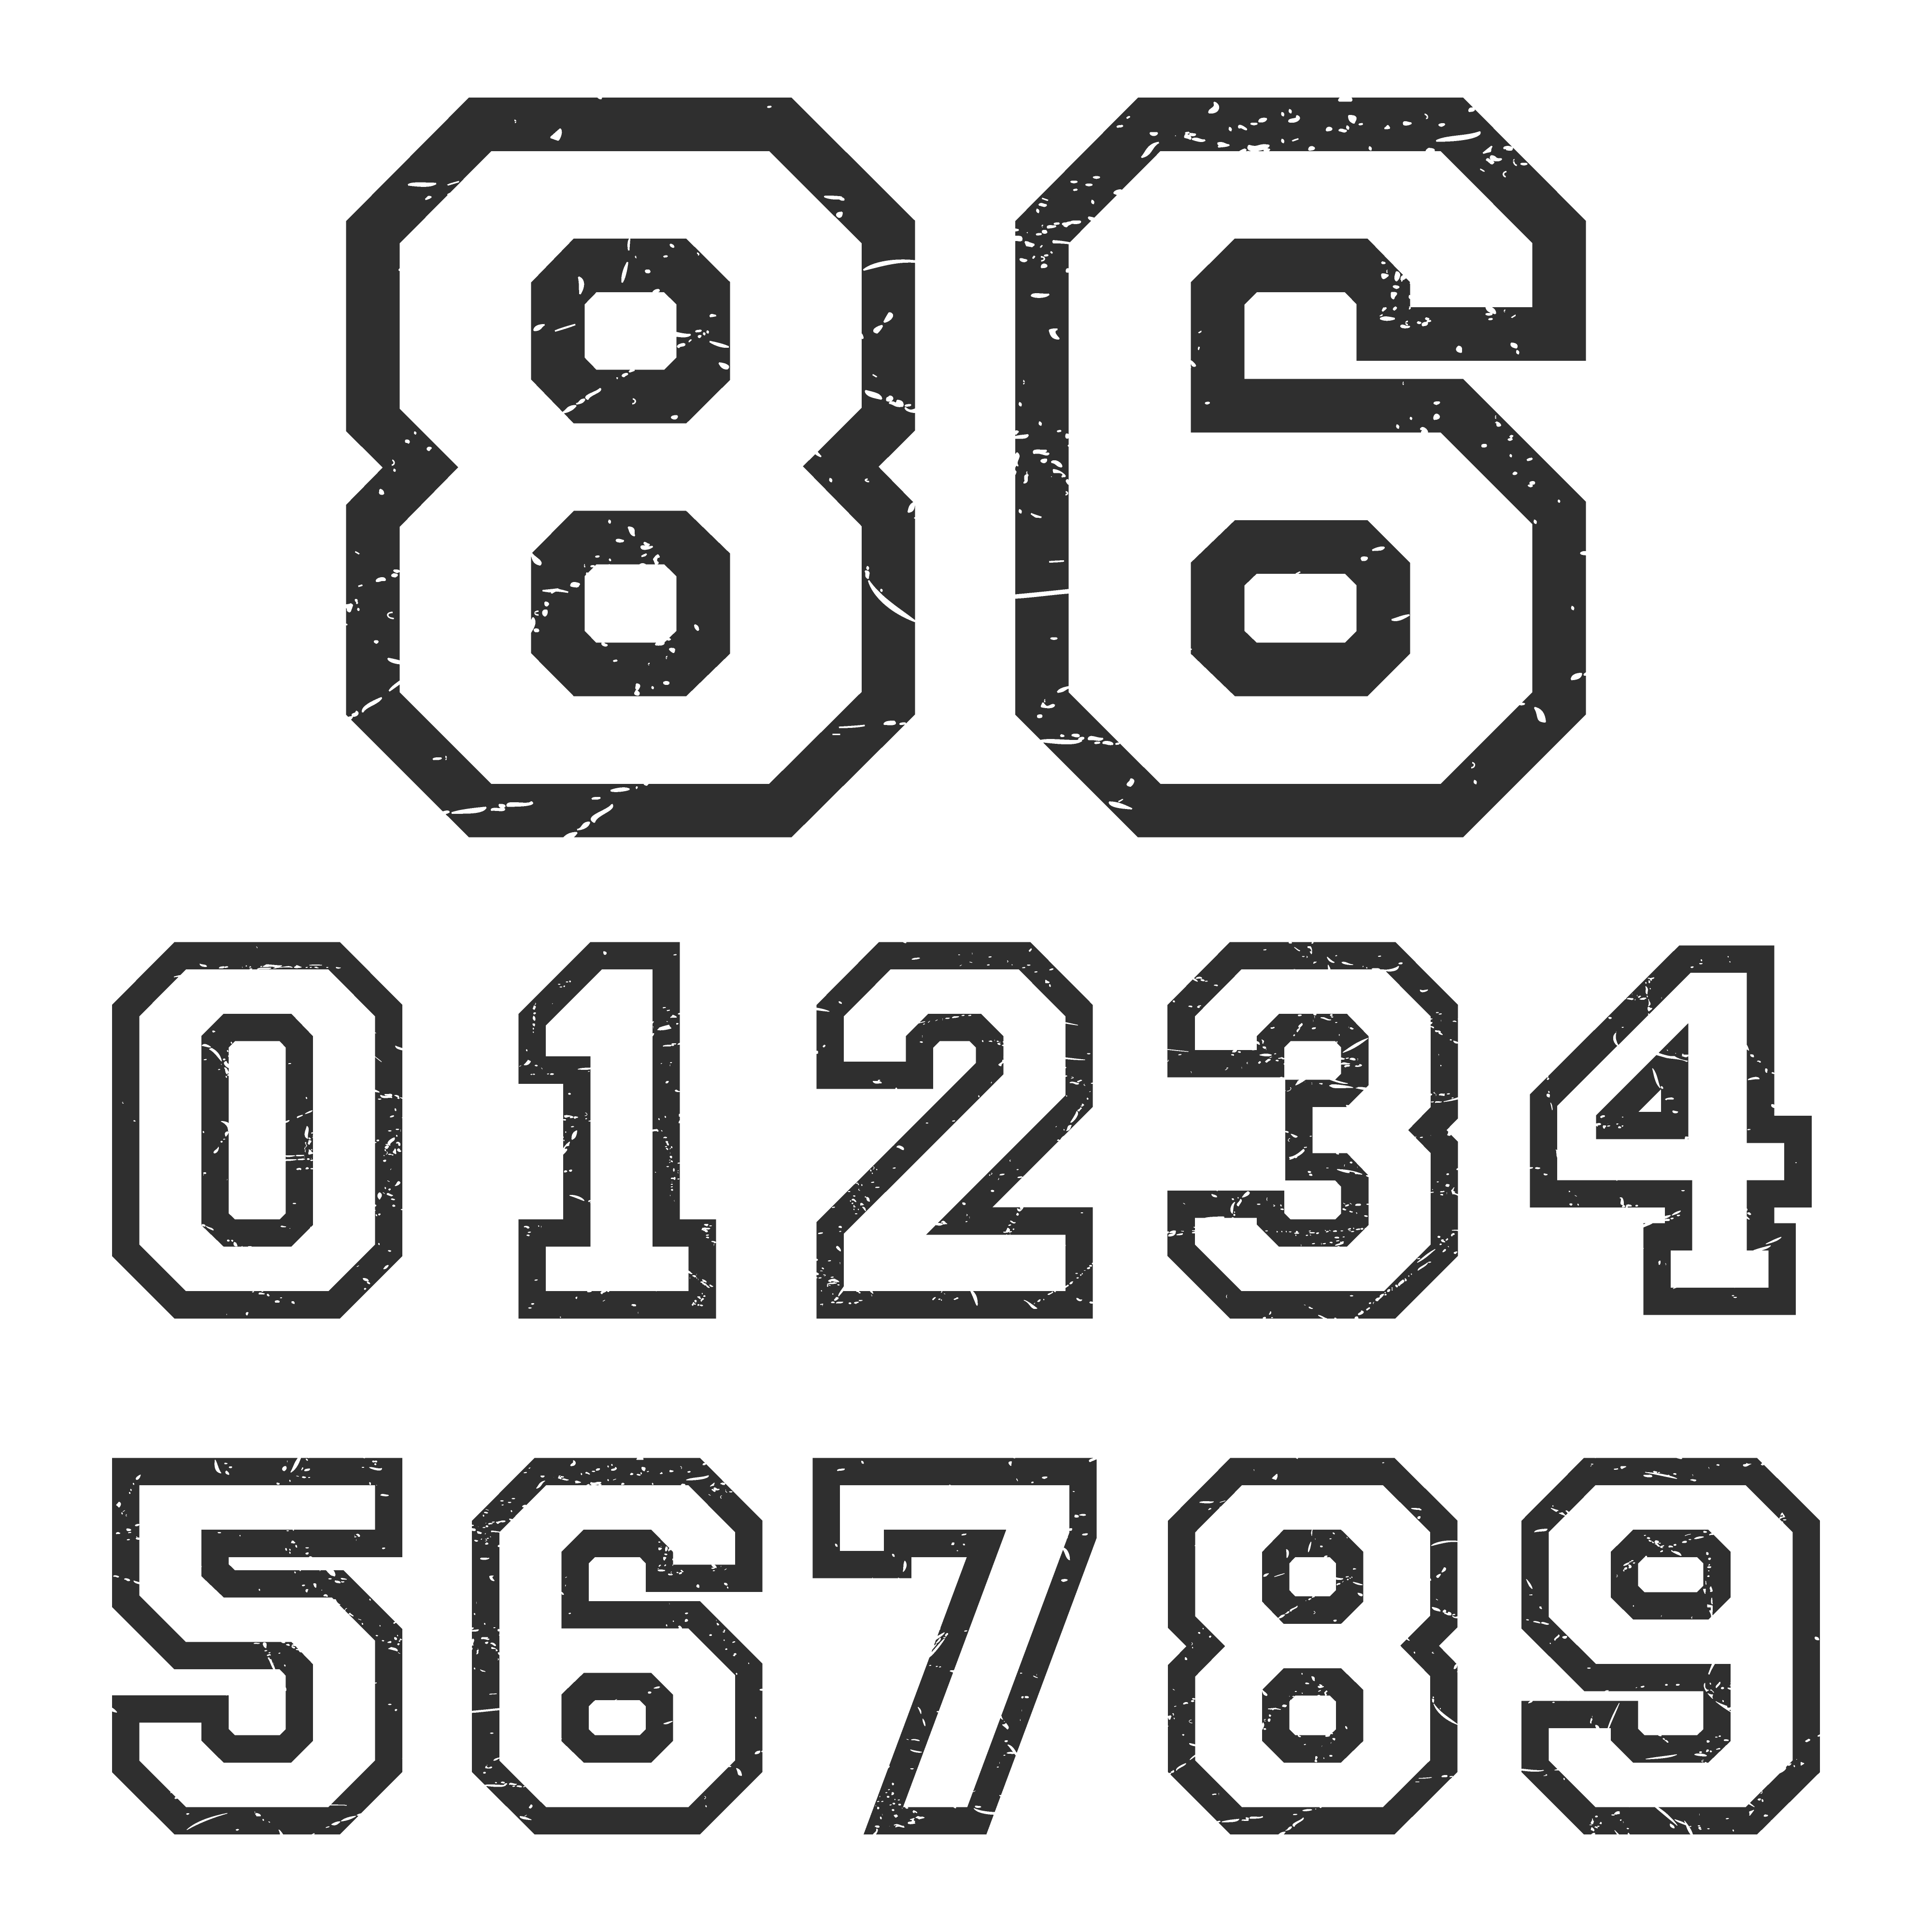 Download Vintage numbers stamp 608826 - Download Free Vectors ...